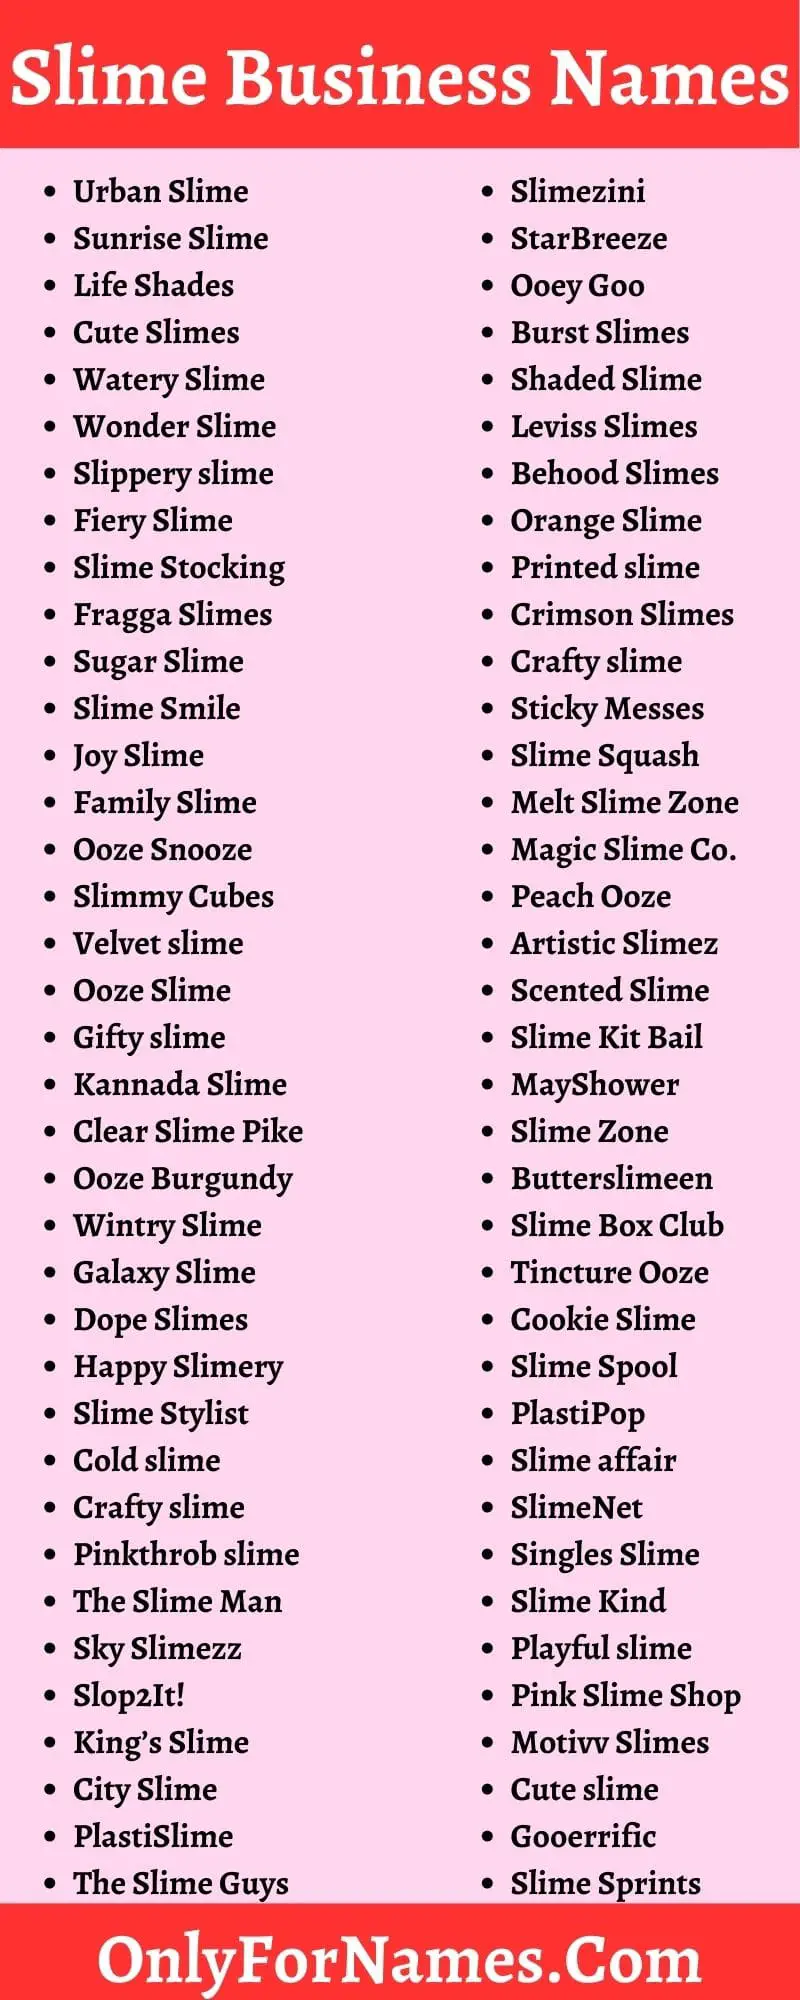 Slime Business Names